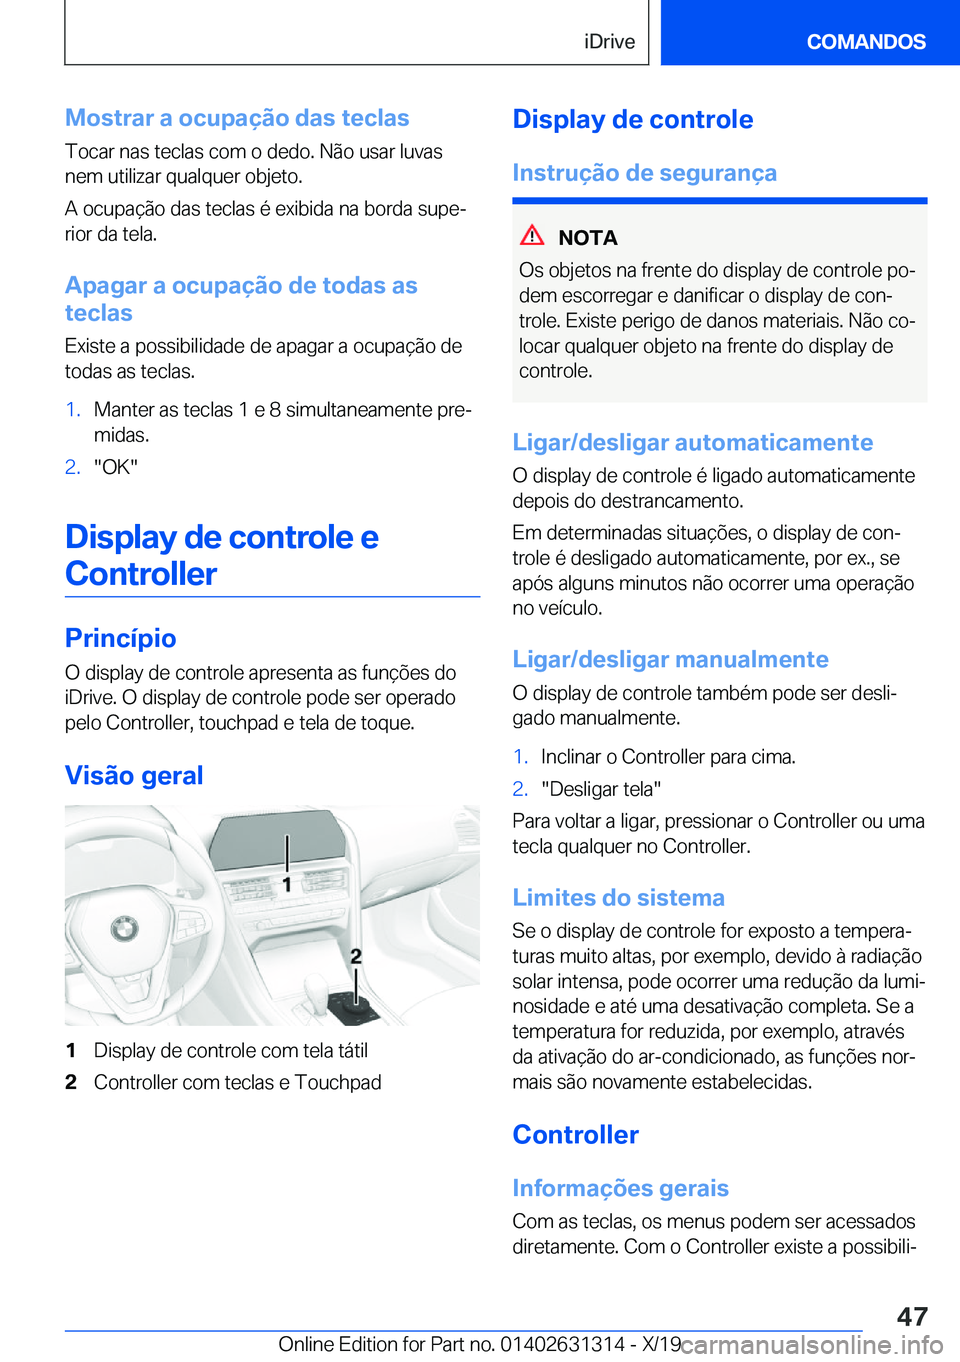 BMW M8 2020  Manual do condutor (in Portuguese) �M�o�s�t�r�a�r��a��o�c�u�p�a�